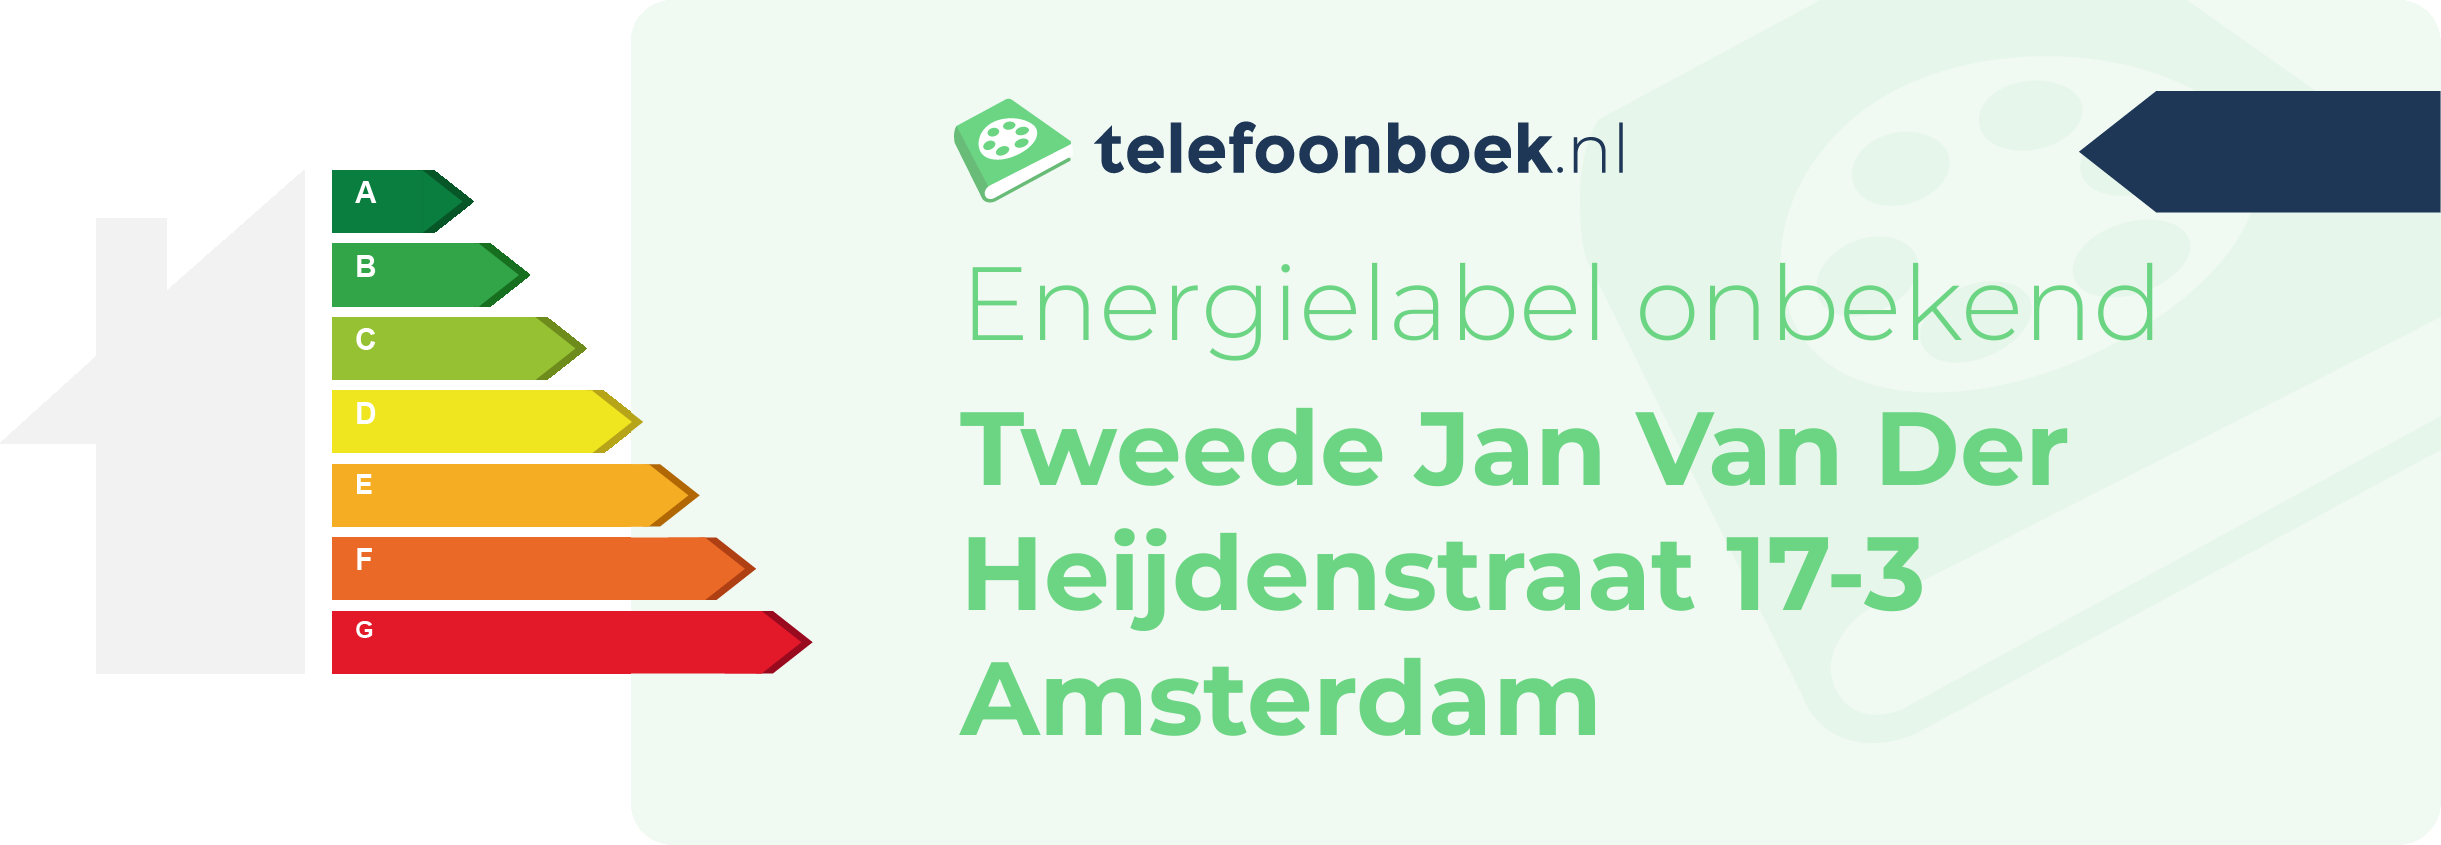 Energielabel Tweede Jan Van Der Heijdenstraat 17-3 Amsterdam